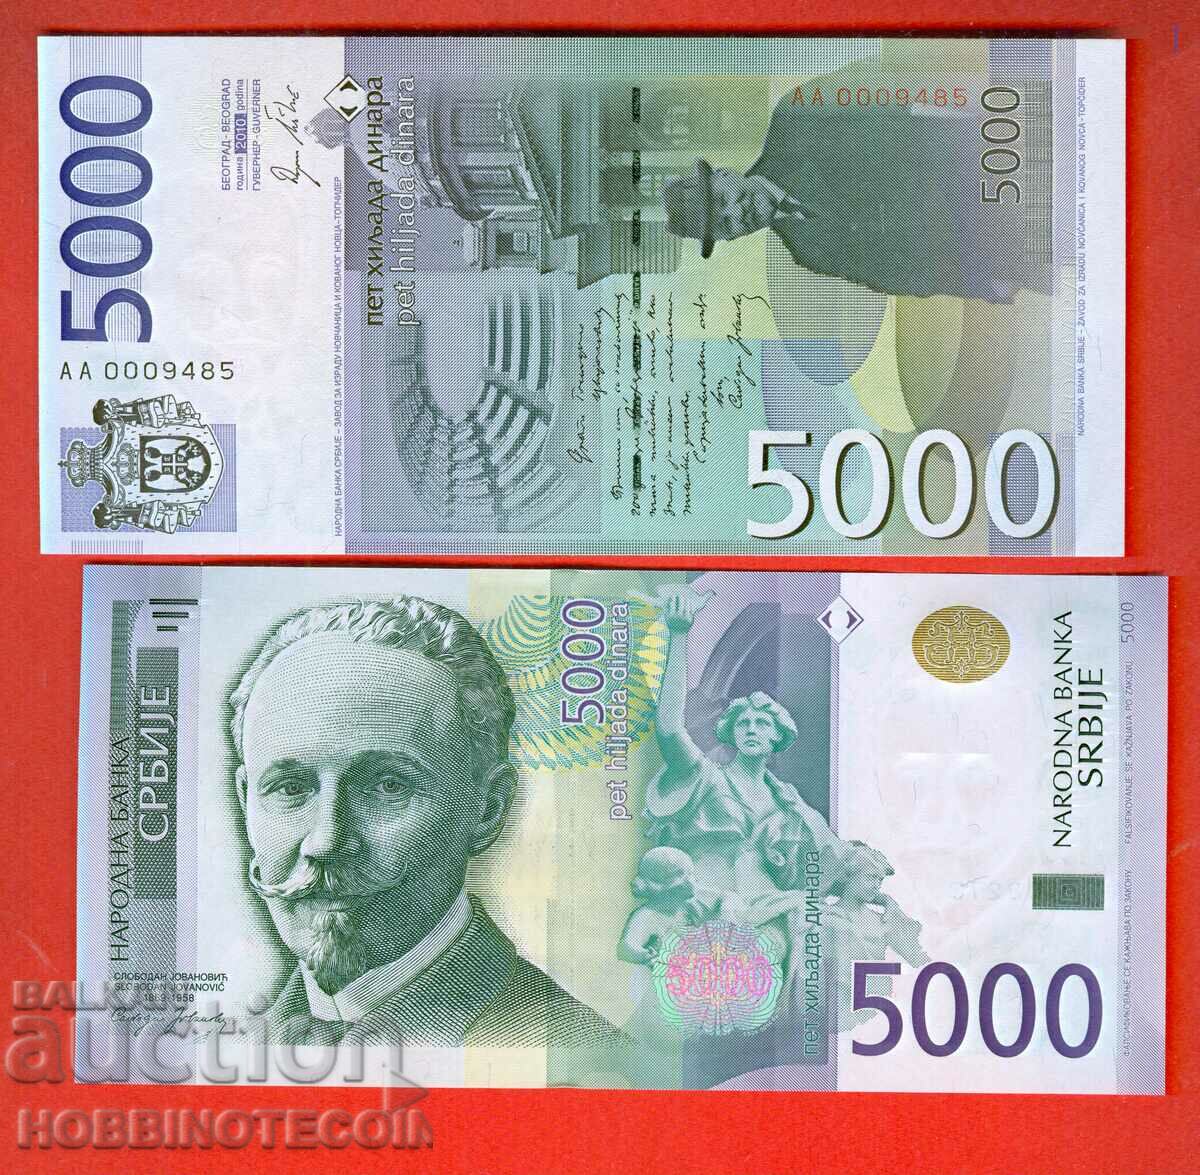 SERBIA SERBIA 5000 - 5000 Dinars issue 2010 NEW UNC